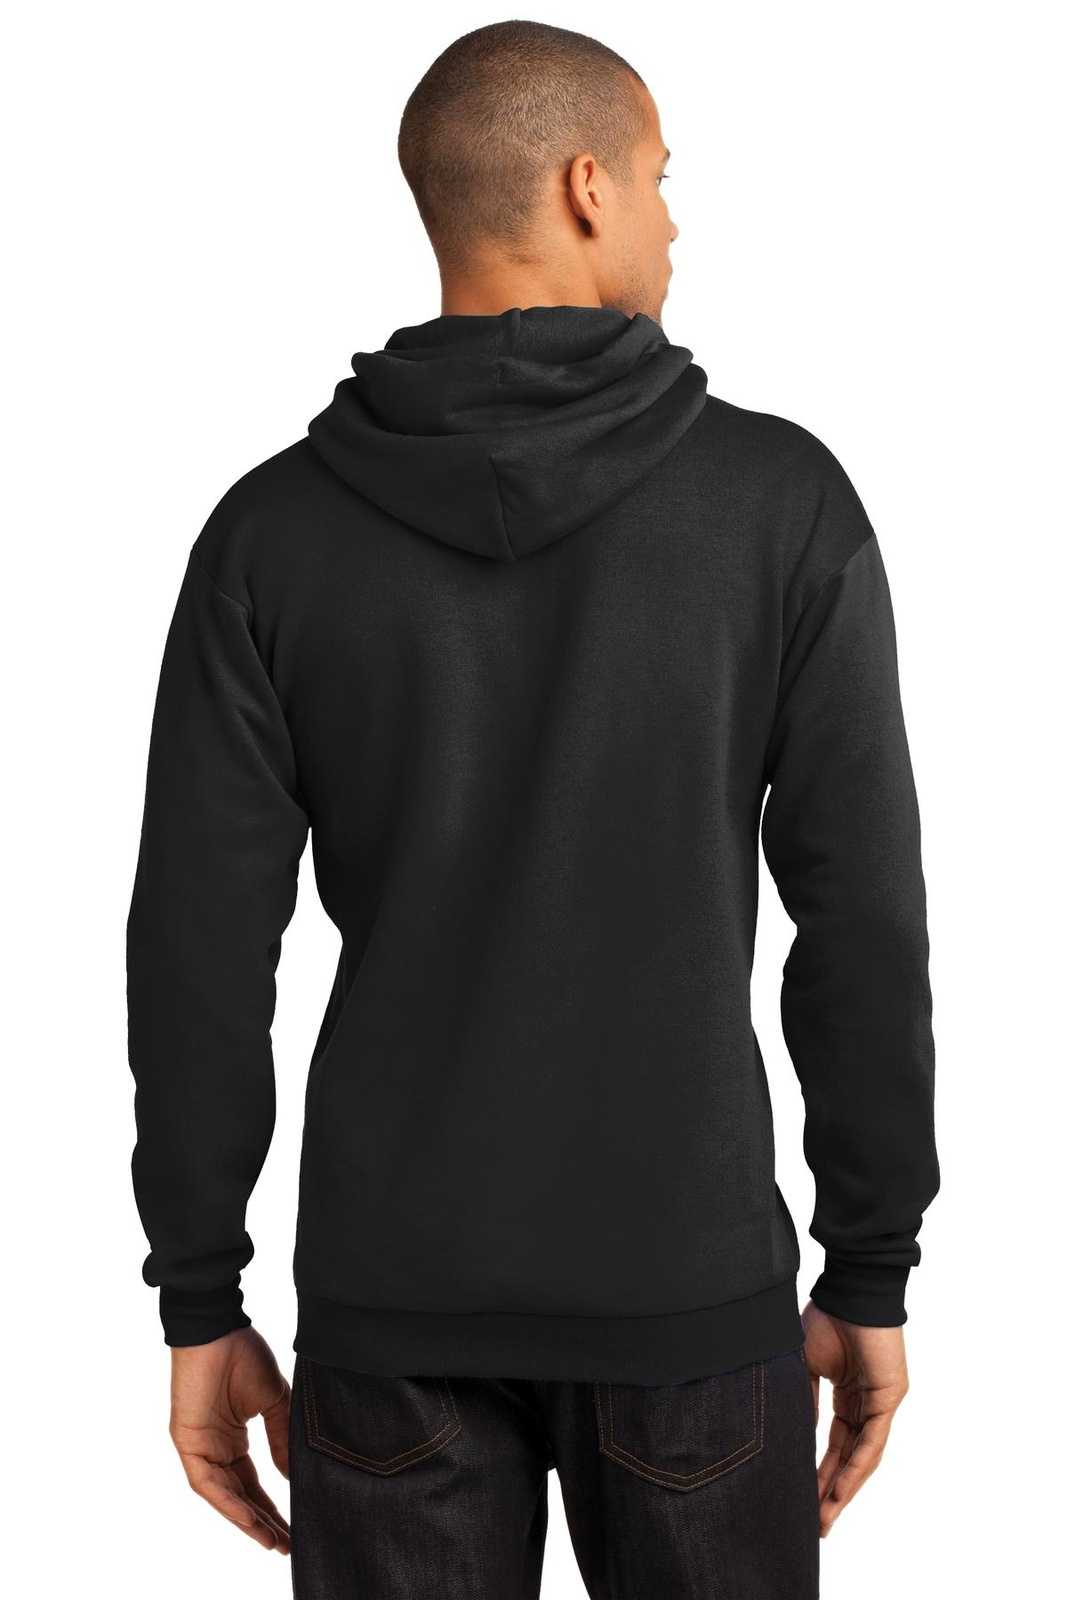 Port & Company PC78H Core Fleece Pullover Hooded Sweatshirt - Jet Black - HIT a Double - 1